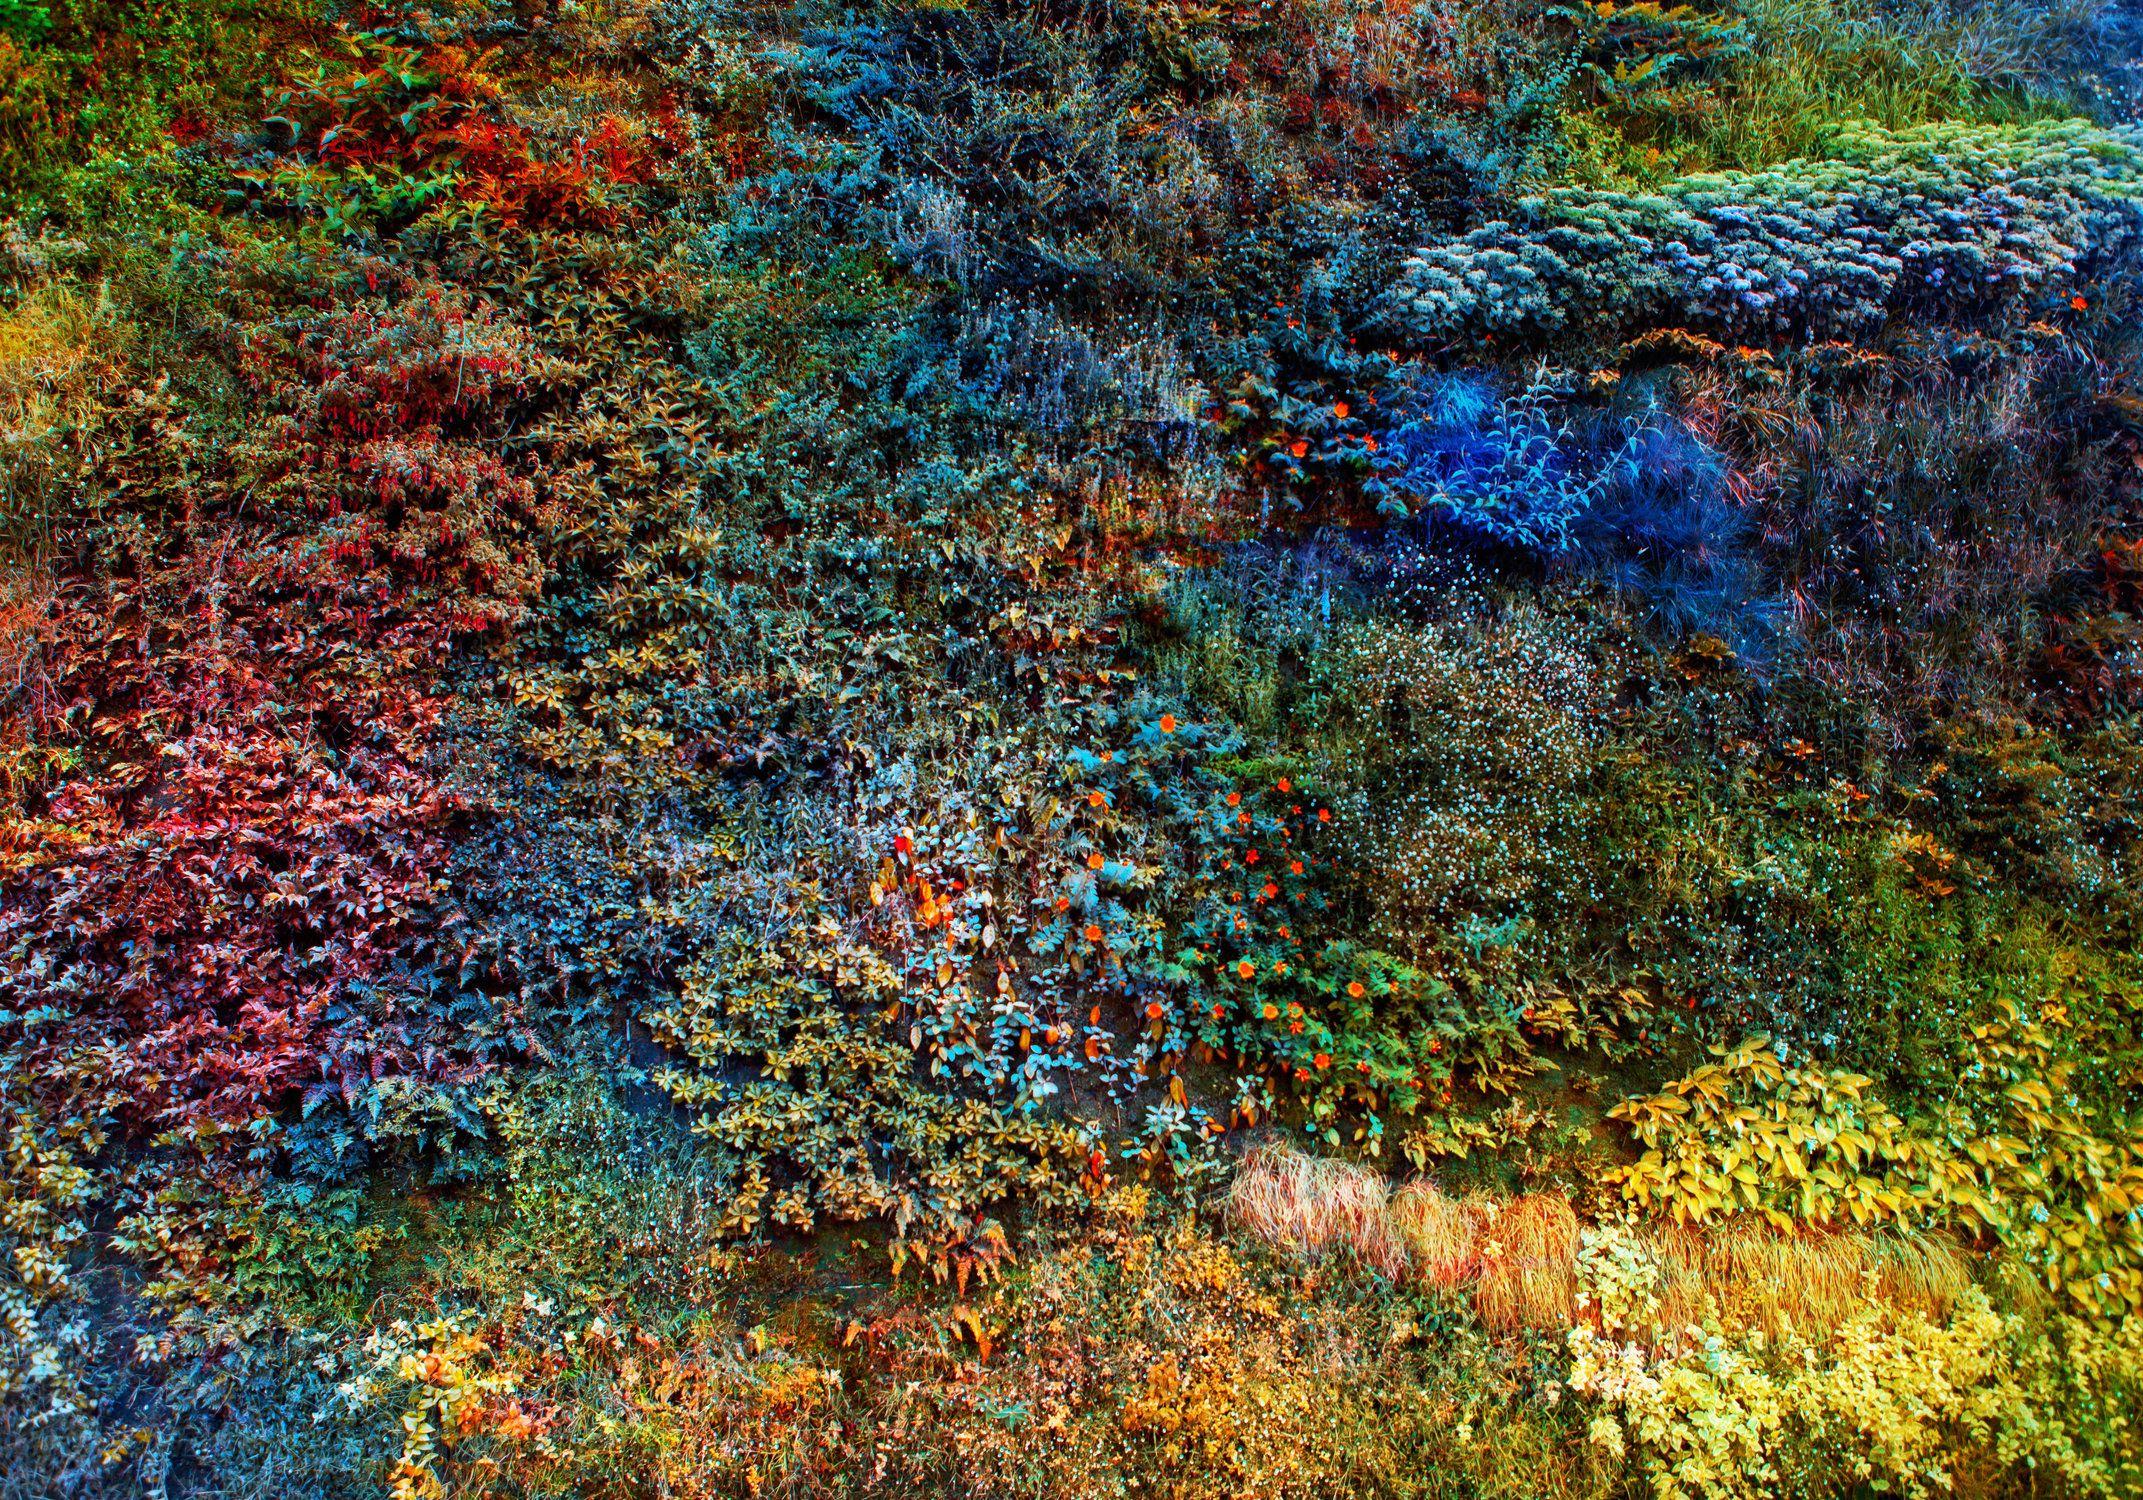 Viet Ha Tran Color Photograph - Wall of Nature VI, Photograph, C-Type